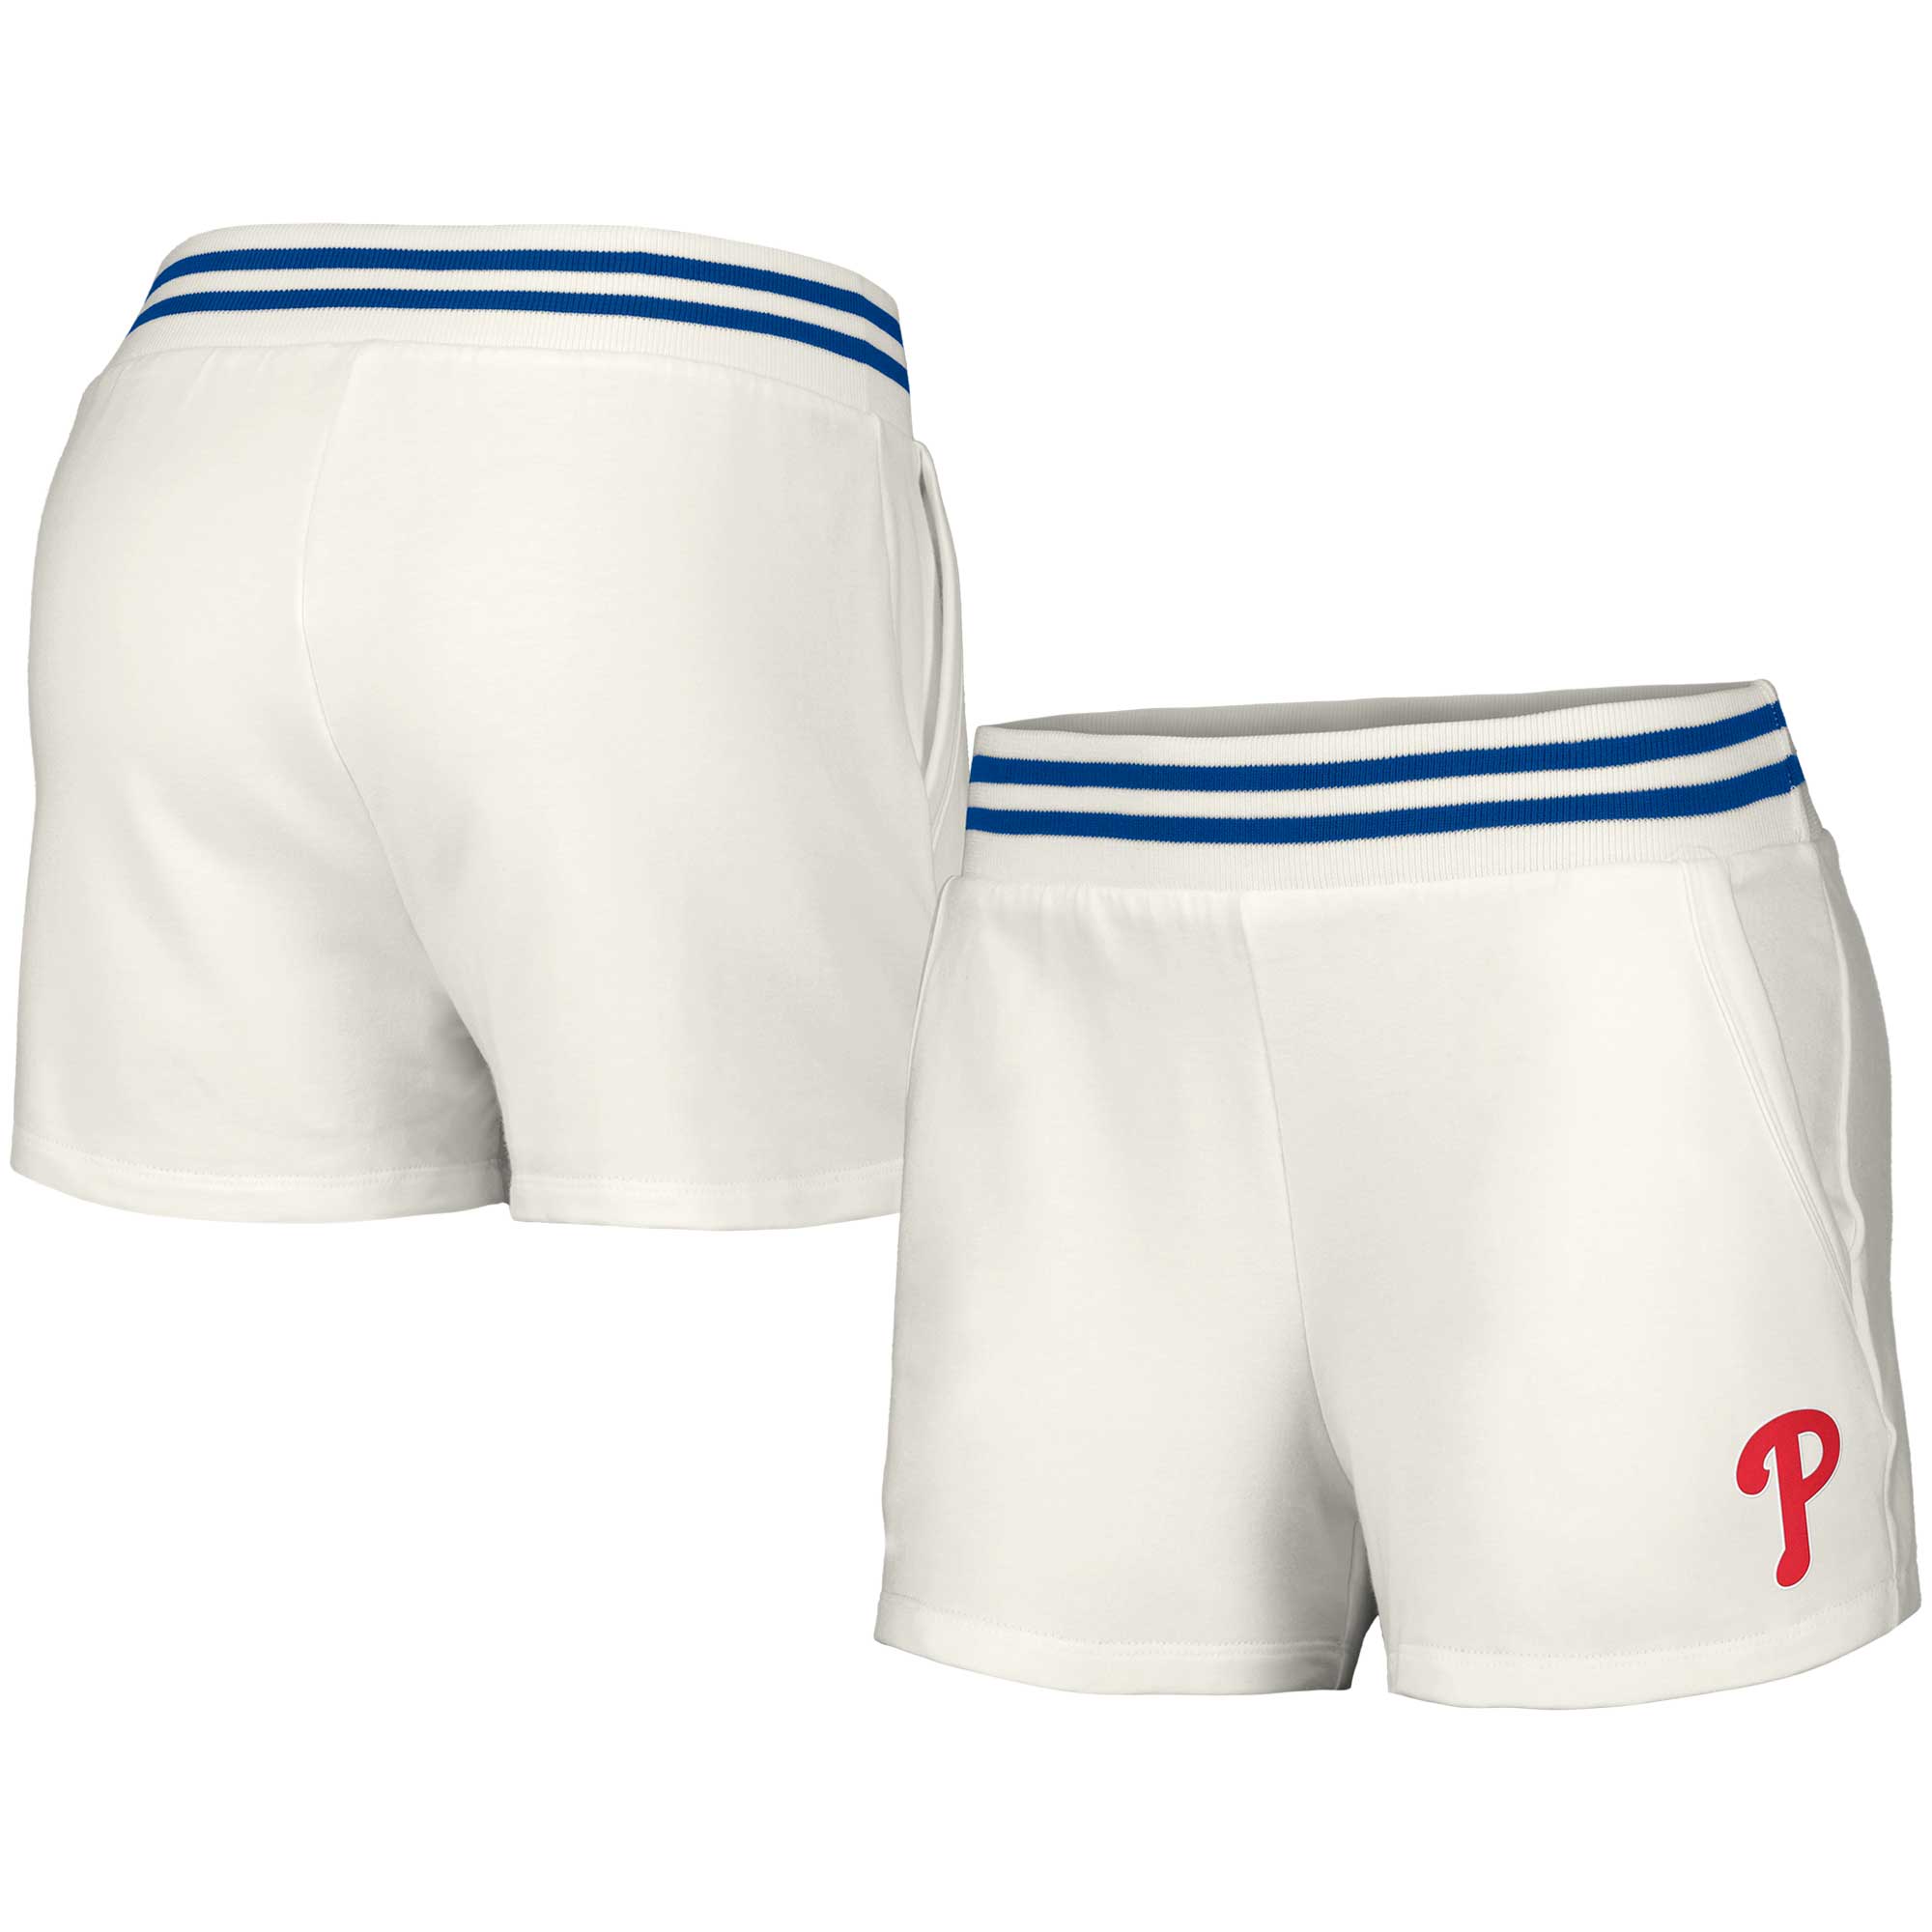 Lusso Phillies Maeg Pocket Shorts - Women's